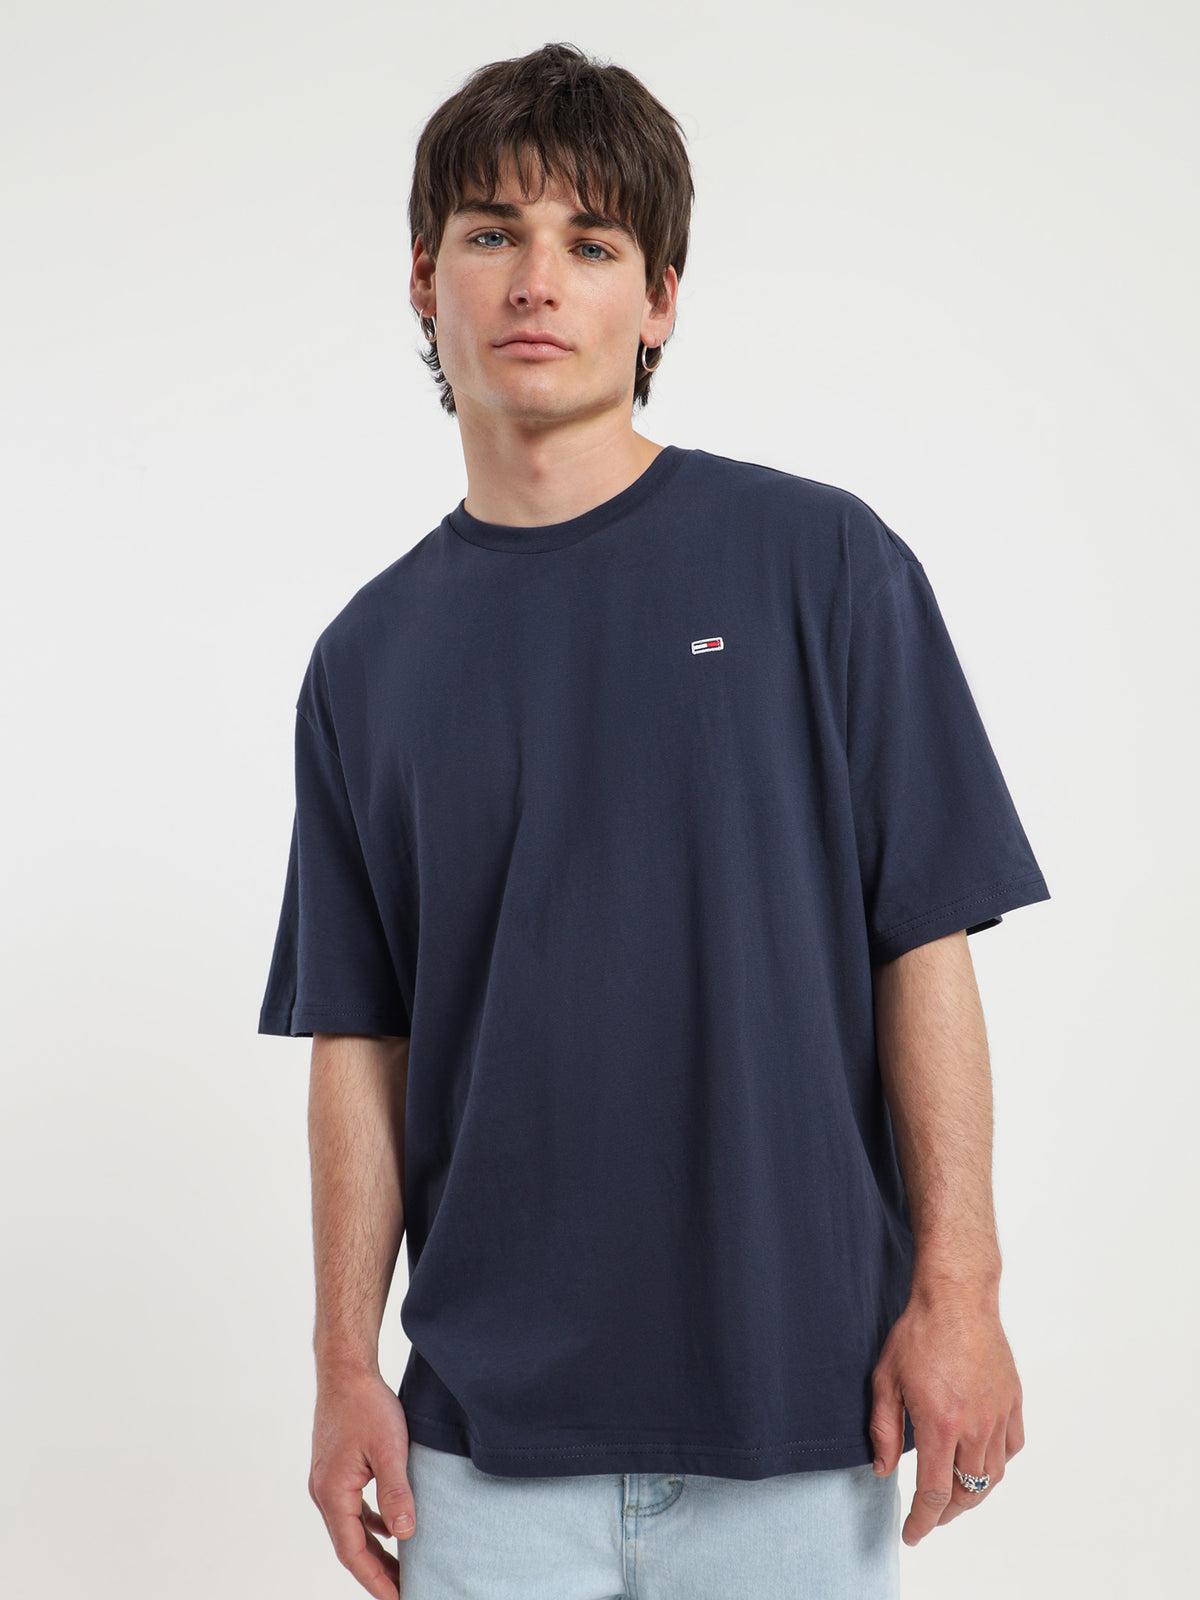 Essential Crew Neck Skate T-Shirt in Navy Blue